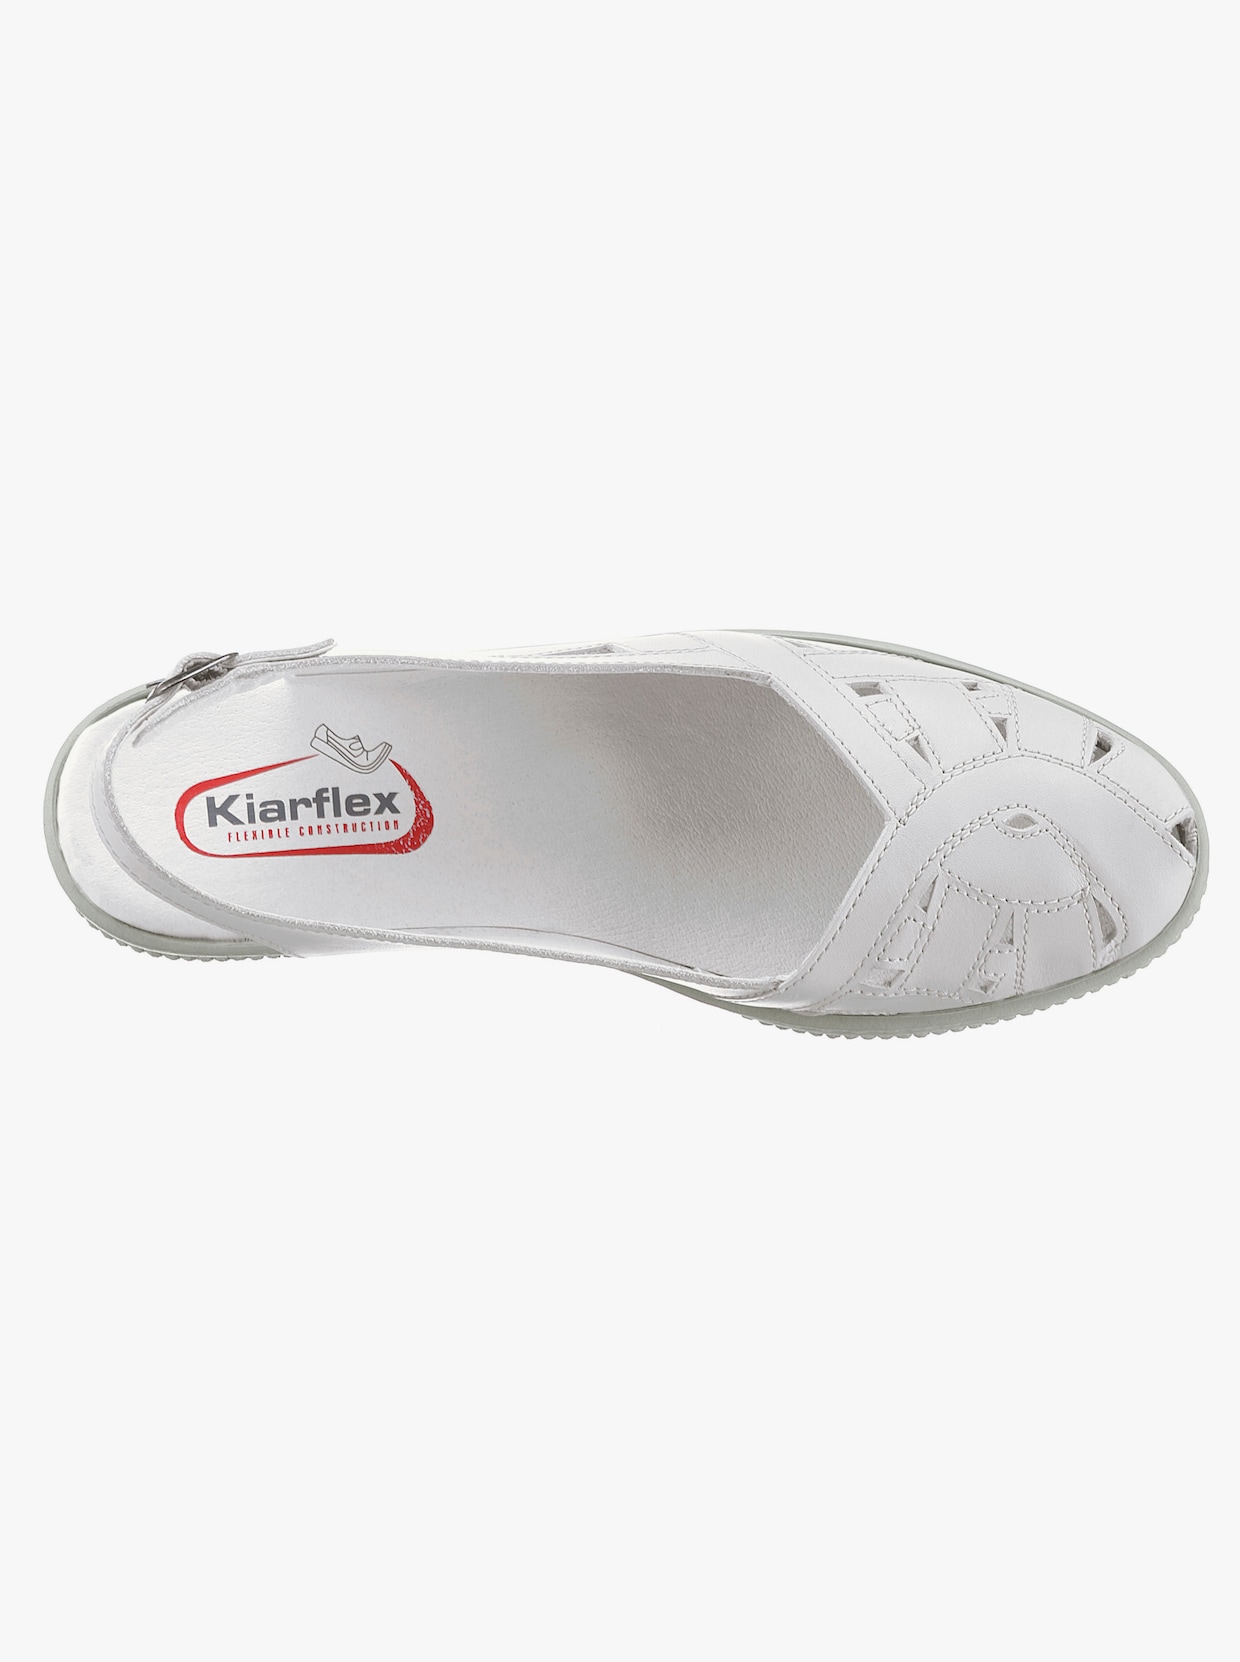 Kiarteflex Sandalette - weiß